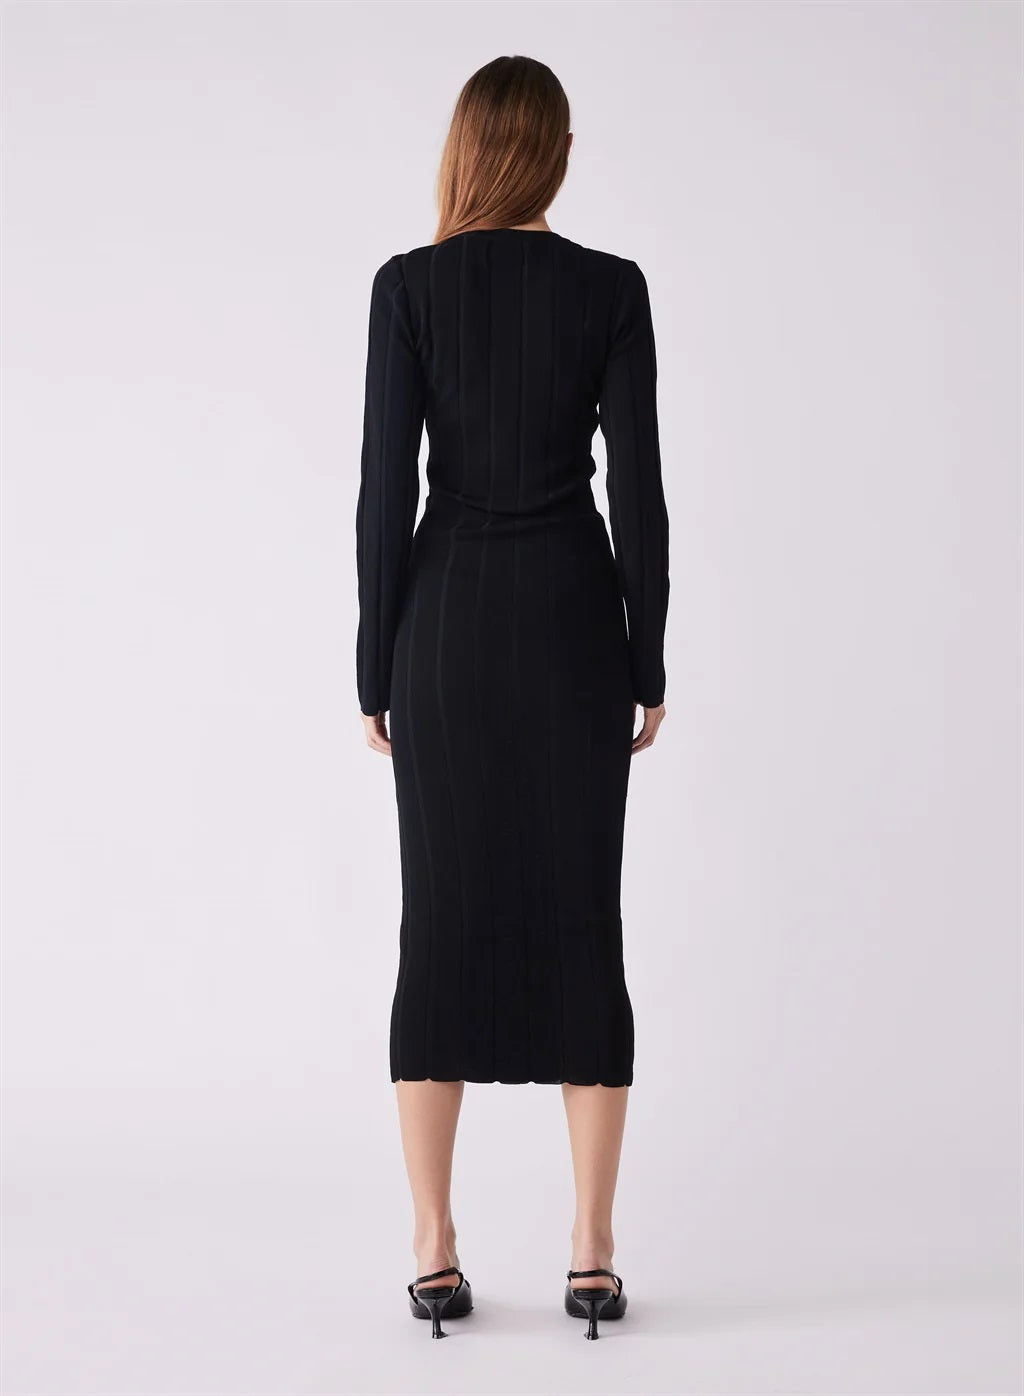 Esmaee Avenue Dress [COLOUR:Black SIZE:XS]